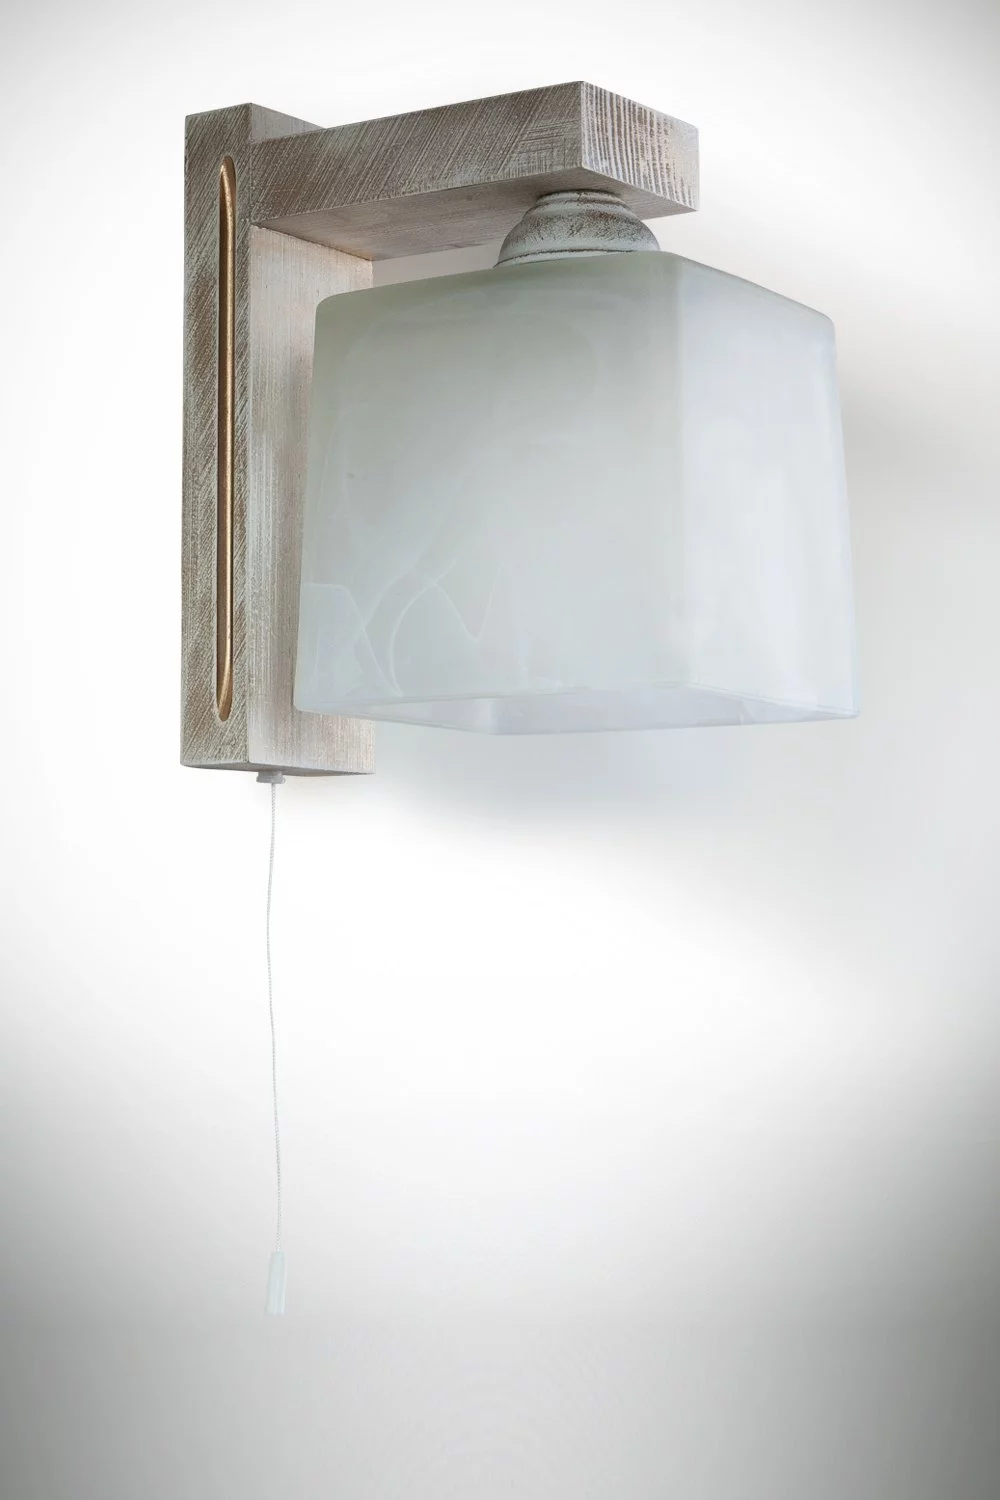   
                        
                        Бра NB LIGHT (Украина) 16598    
                         в стиле Модерн.  
                        Тип источника света: светодиодная лампа, сменная.                                                 Цвета плафонов и подвесок: Белый.                         Материал: Стекло.                          фото 1